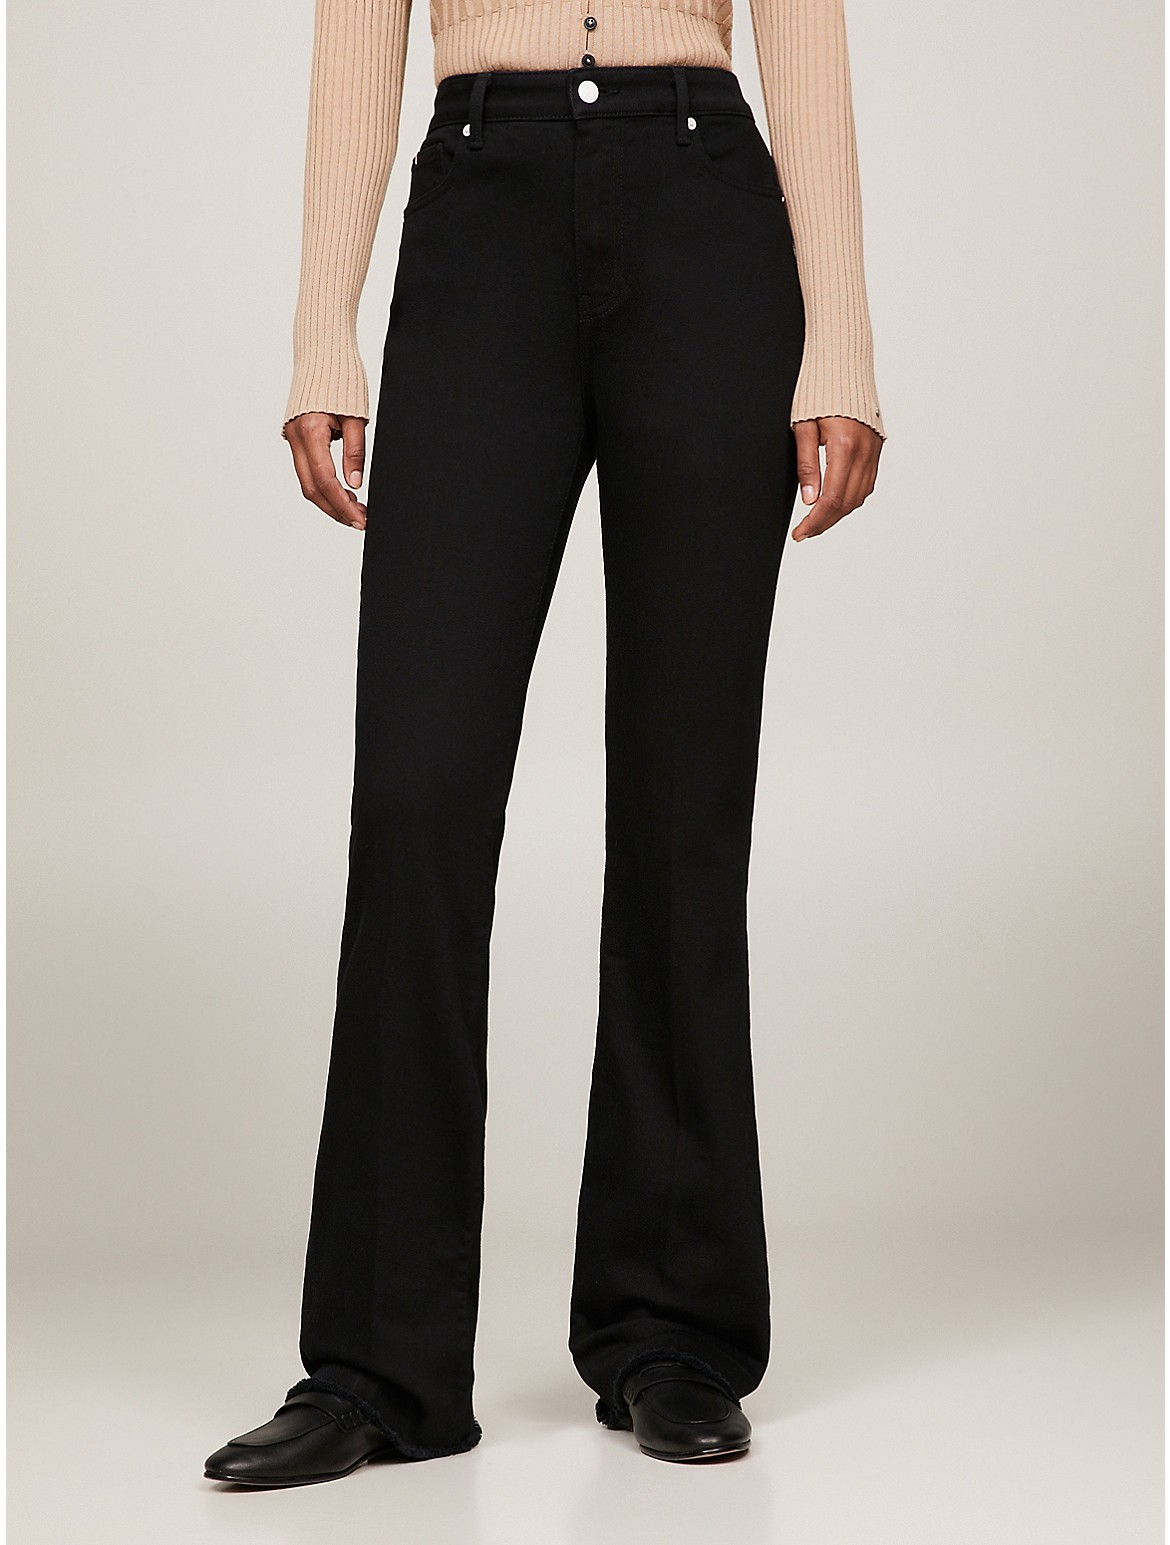 Tommy Hilfiger Women's High-Waist Bootcut Fit Black Jean